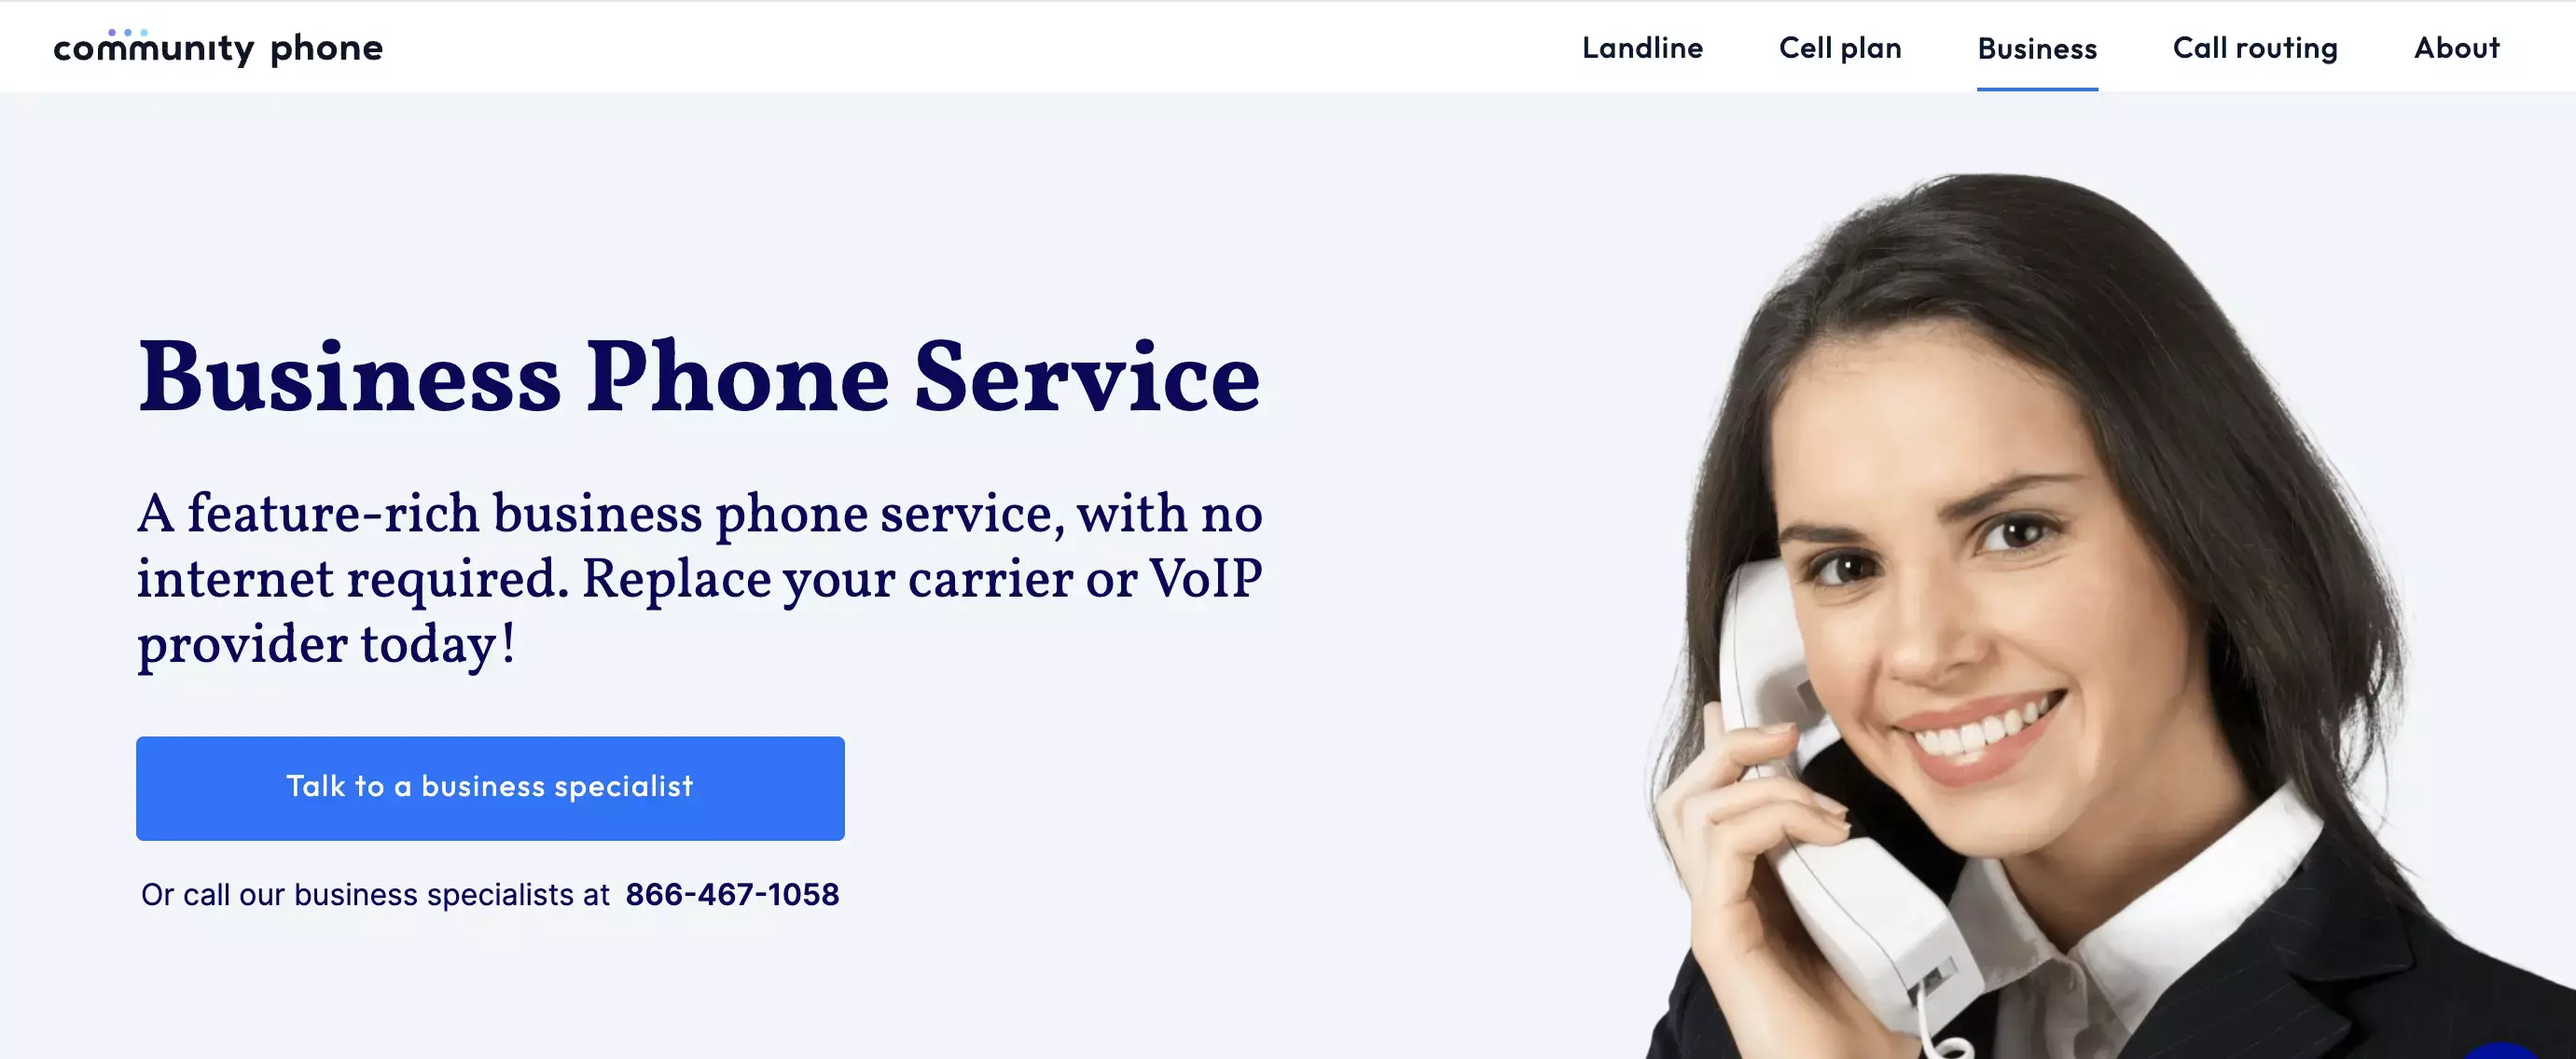 Image of Community Phone business landline